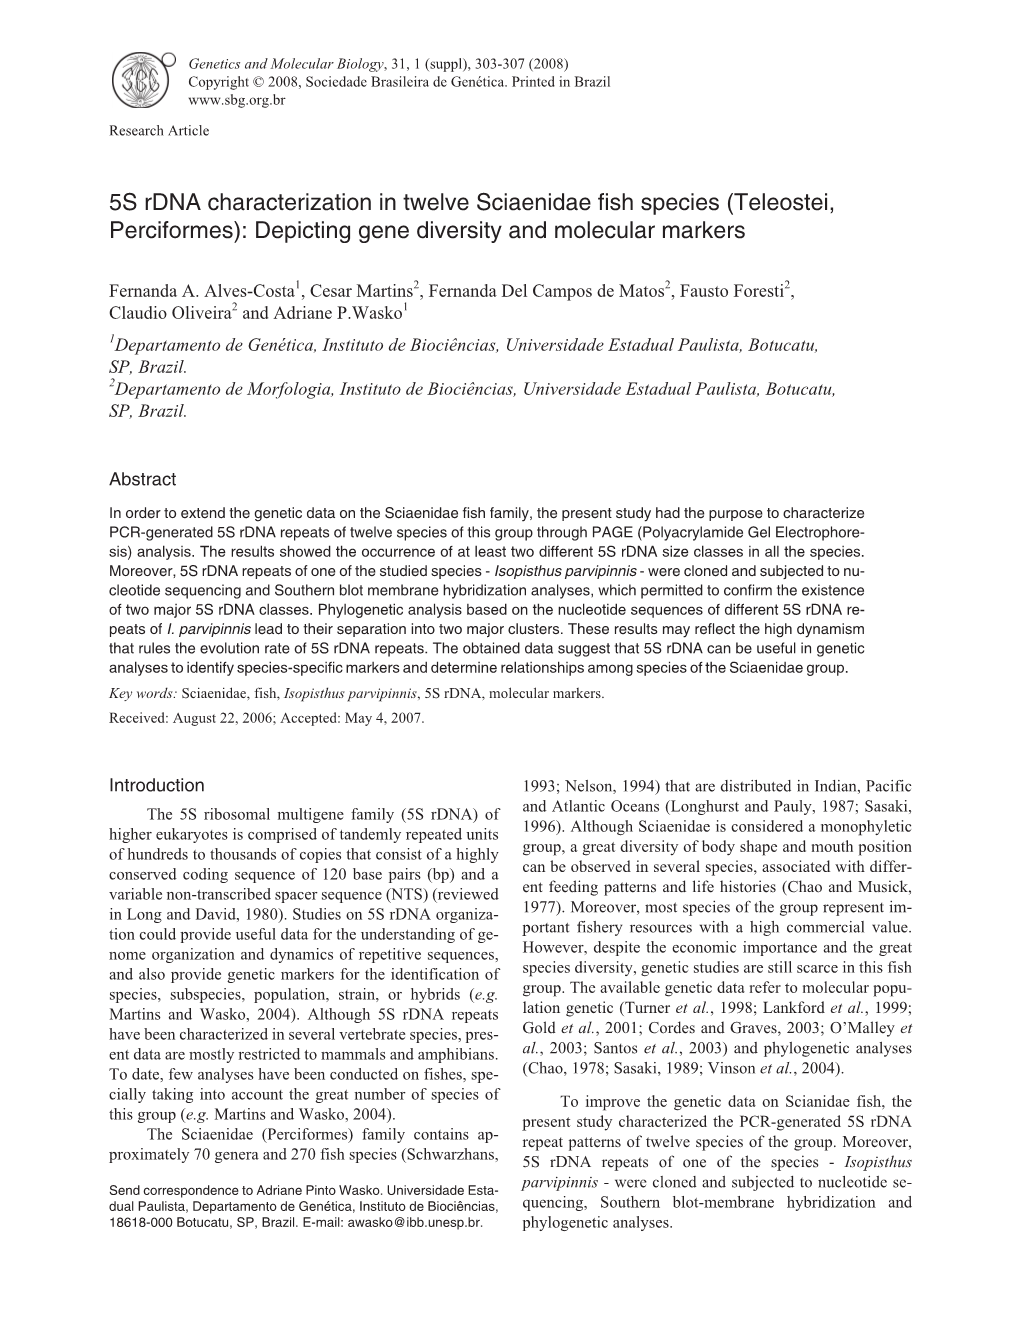 5S Rdna Characterization in Twelve Sciaenidae Fish Species (Teleostei, Perciformes): Depicting Gene Diversity and Molecular Markers